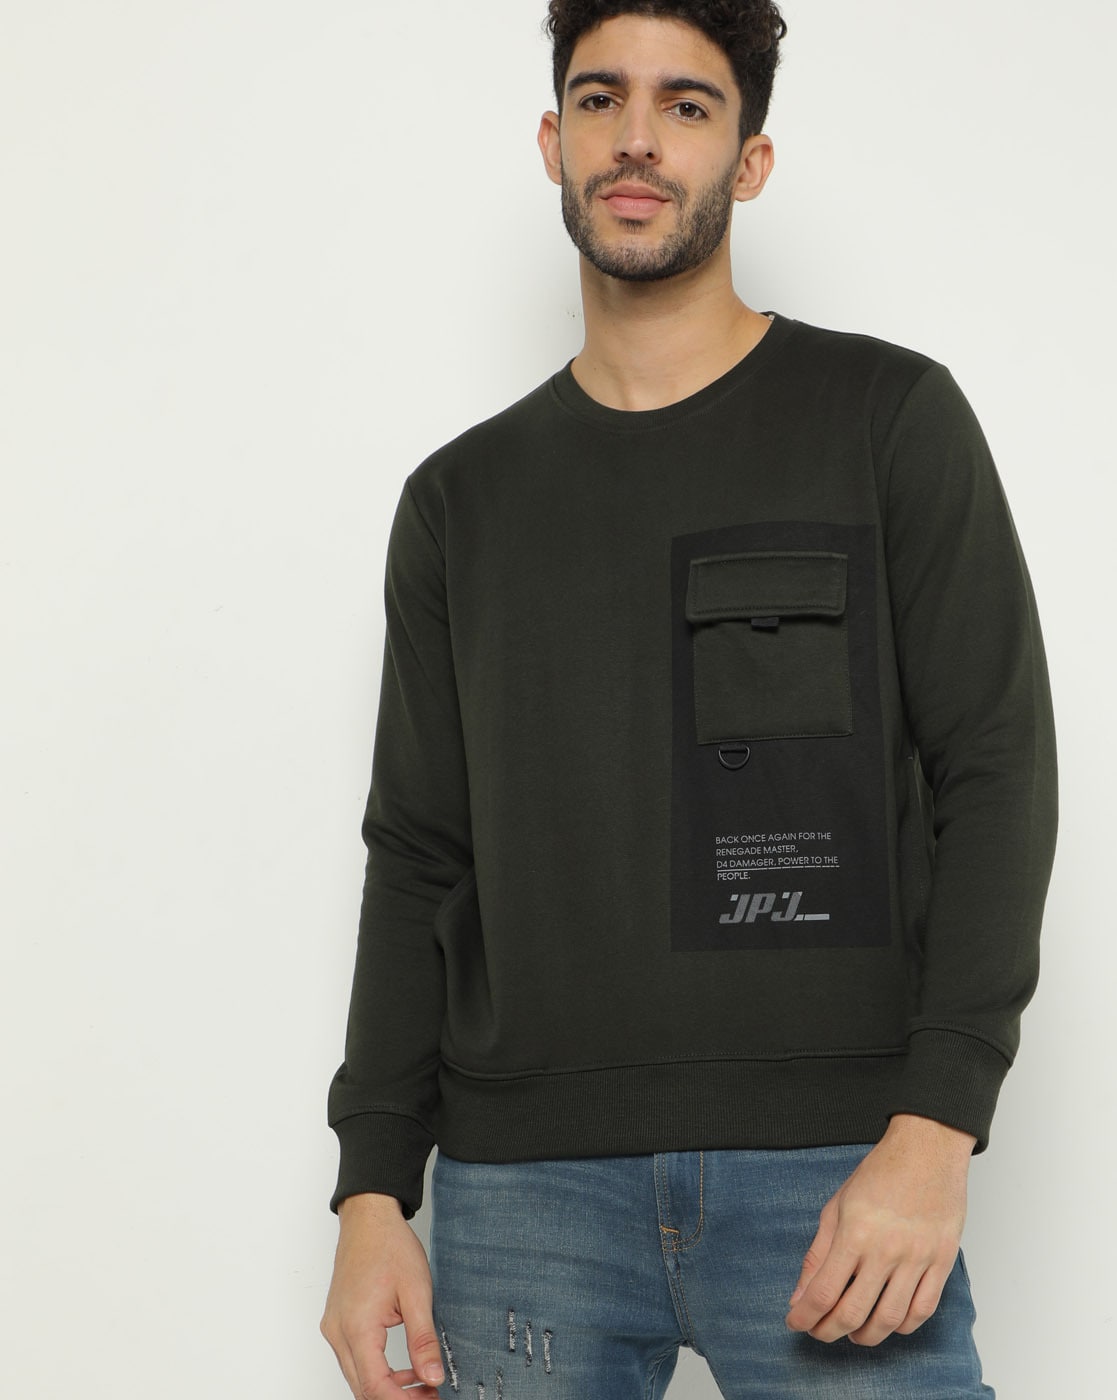 Buy Olive Sweatshirt & Hoodies for Men by JOHN PLAYERS JEANS Online